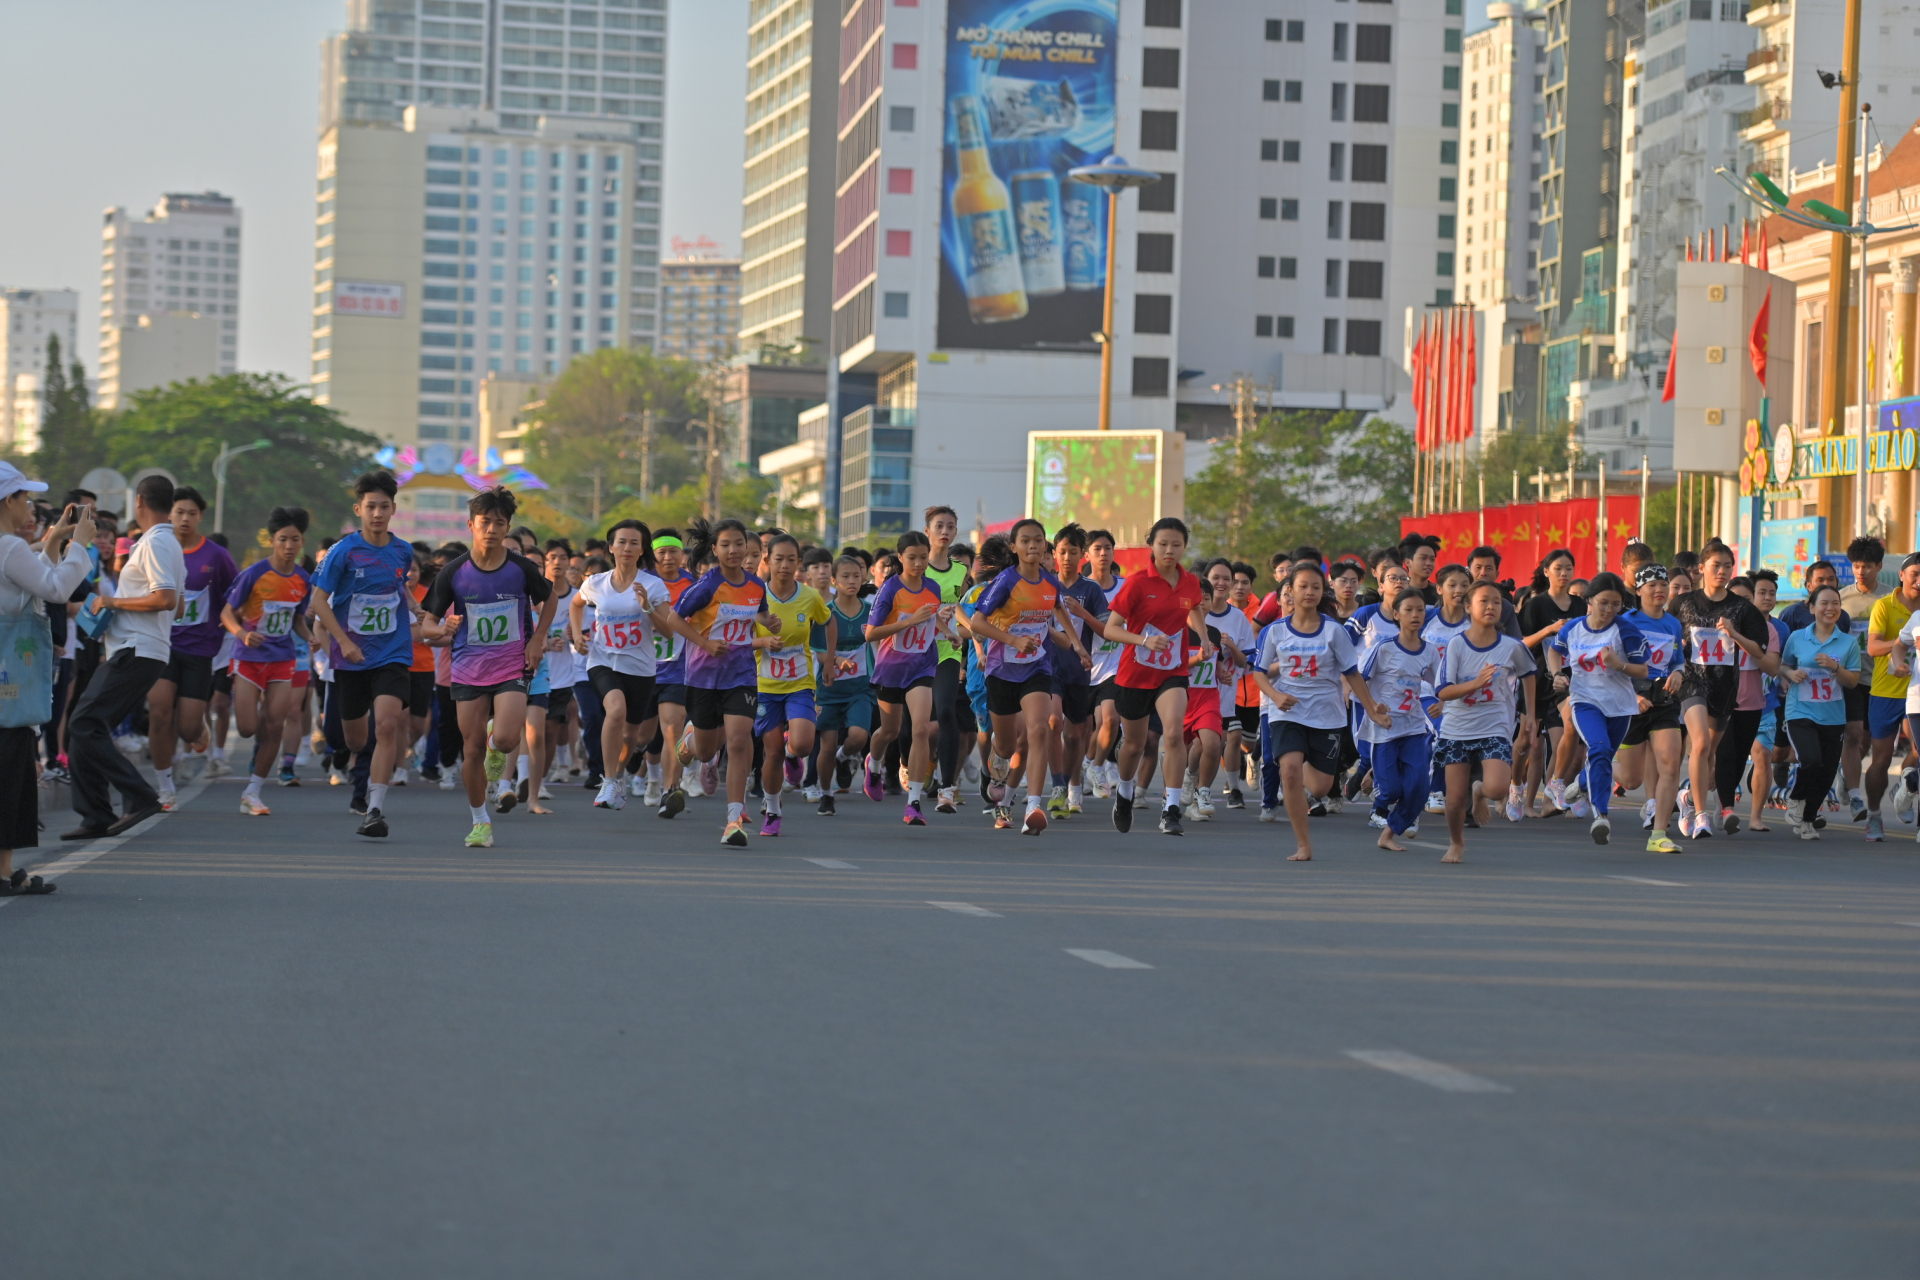 The runners in Nha Trang cross-country run championships

